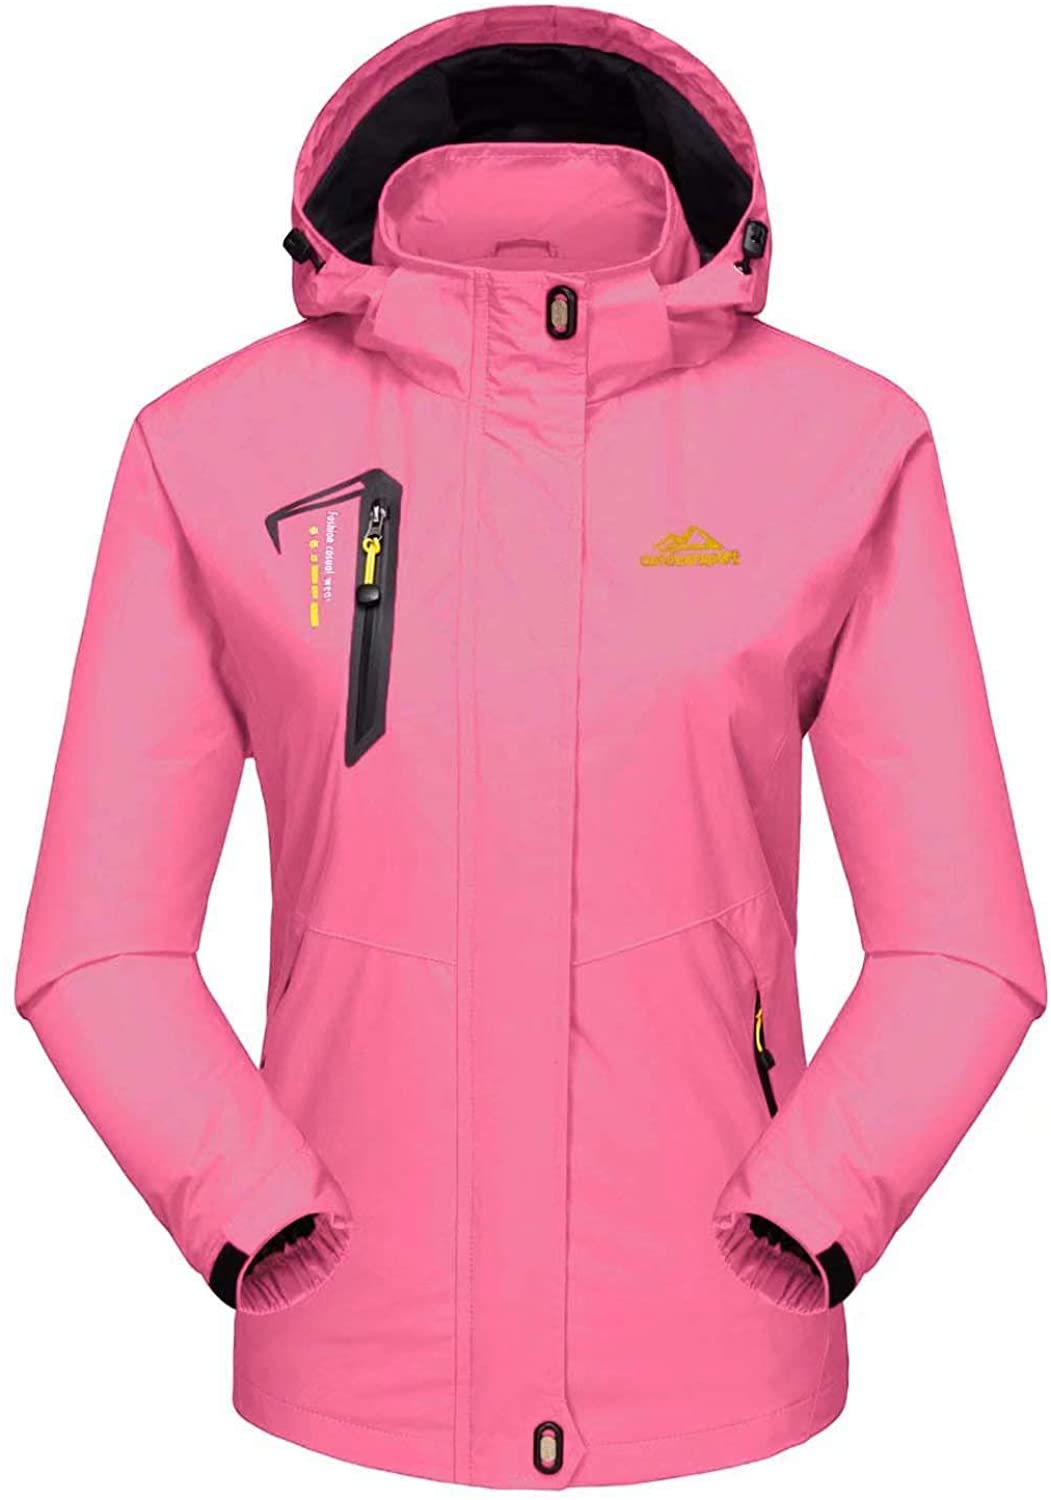 MAGCOMSEN Women's Windbreaker Rain Jacket Water Resistant Hiking Jacket Lightweight Raincoat for Running Fishing 